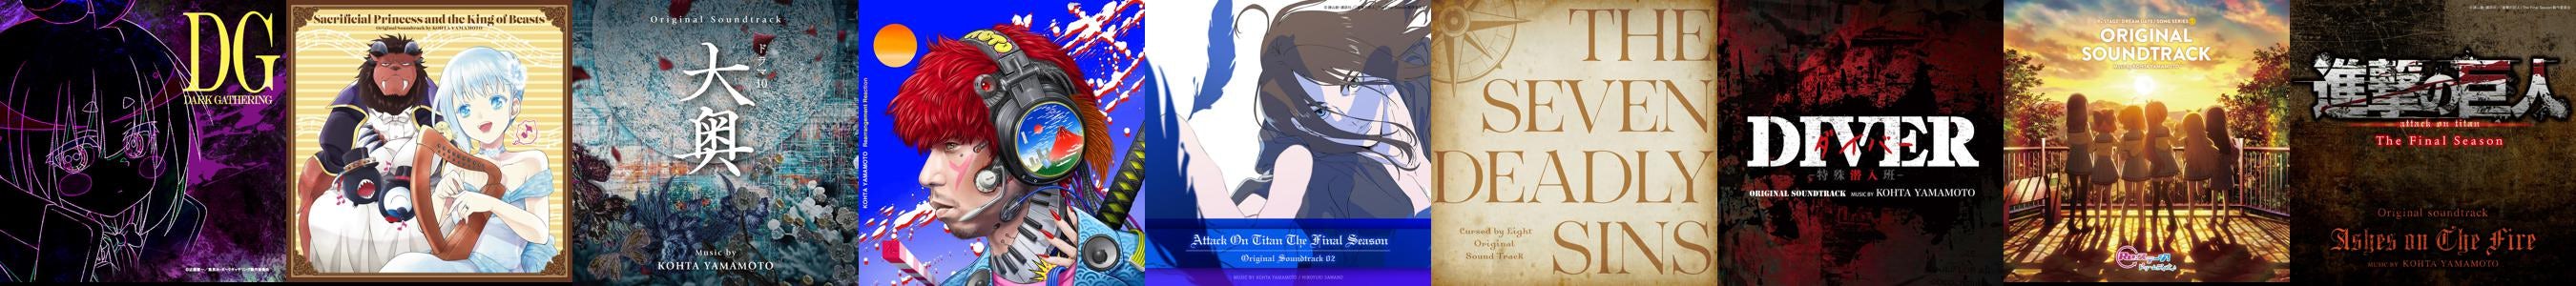 Attack On Titan The Final Season Original Soundtrack 02 - Album by KOHTA  YAMAMOTO